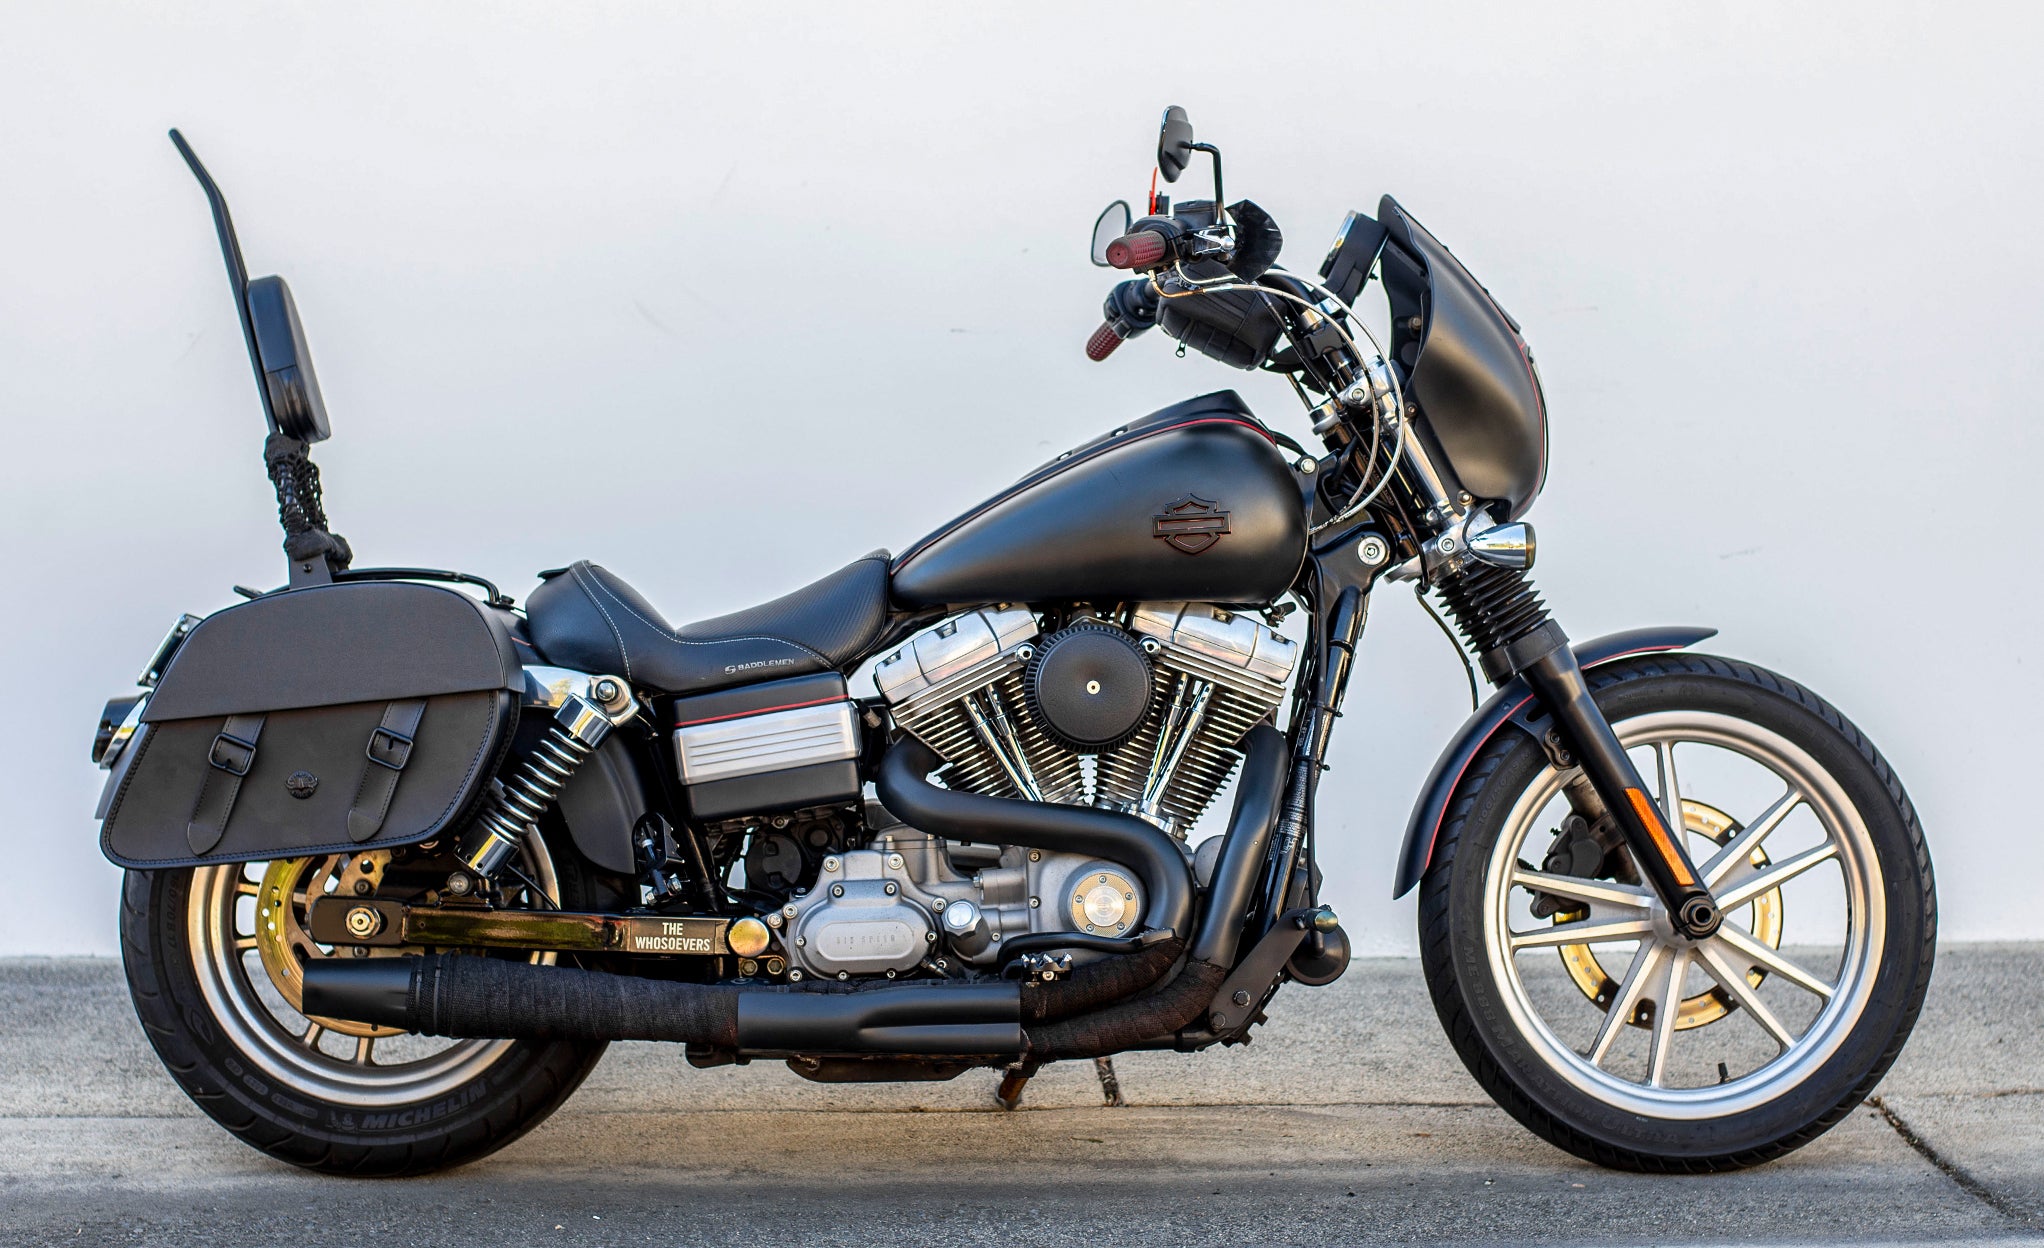 28L - Baelor Medium Motorcycle Saddlebags for Harley Dyna Super Glide FXD/I @expand